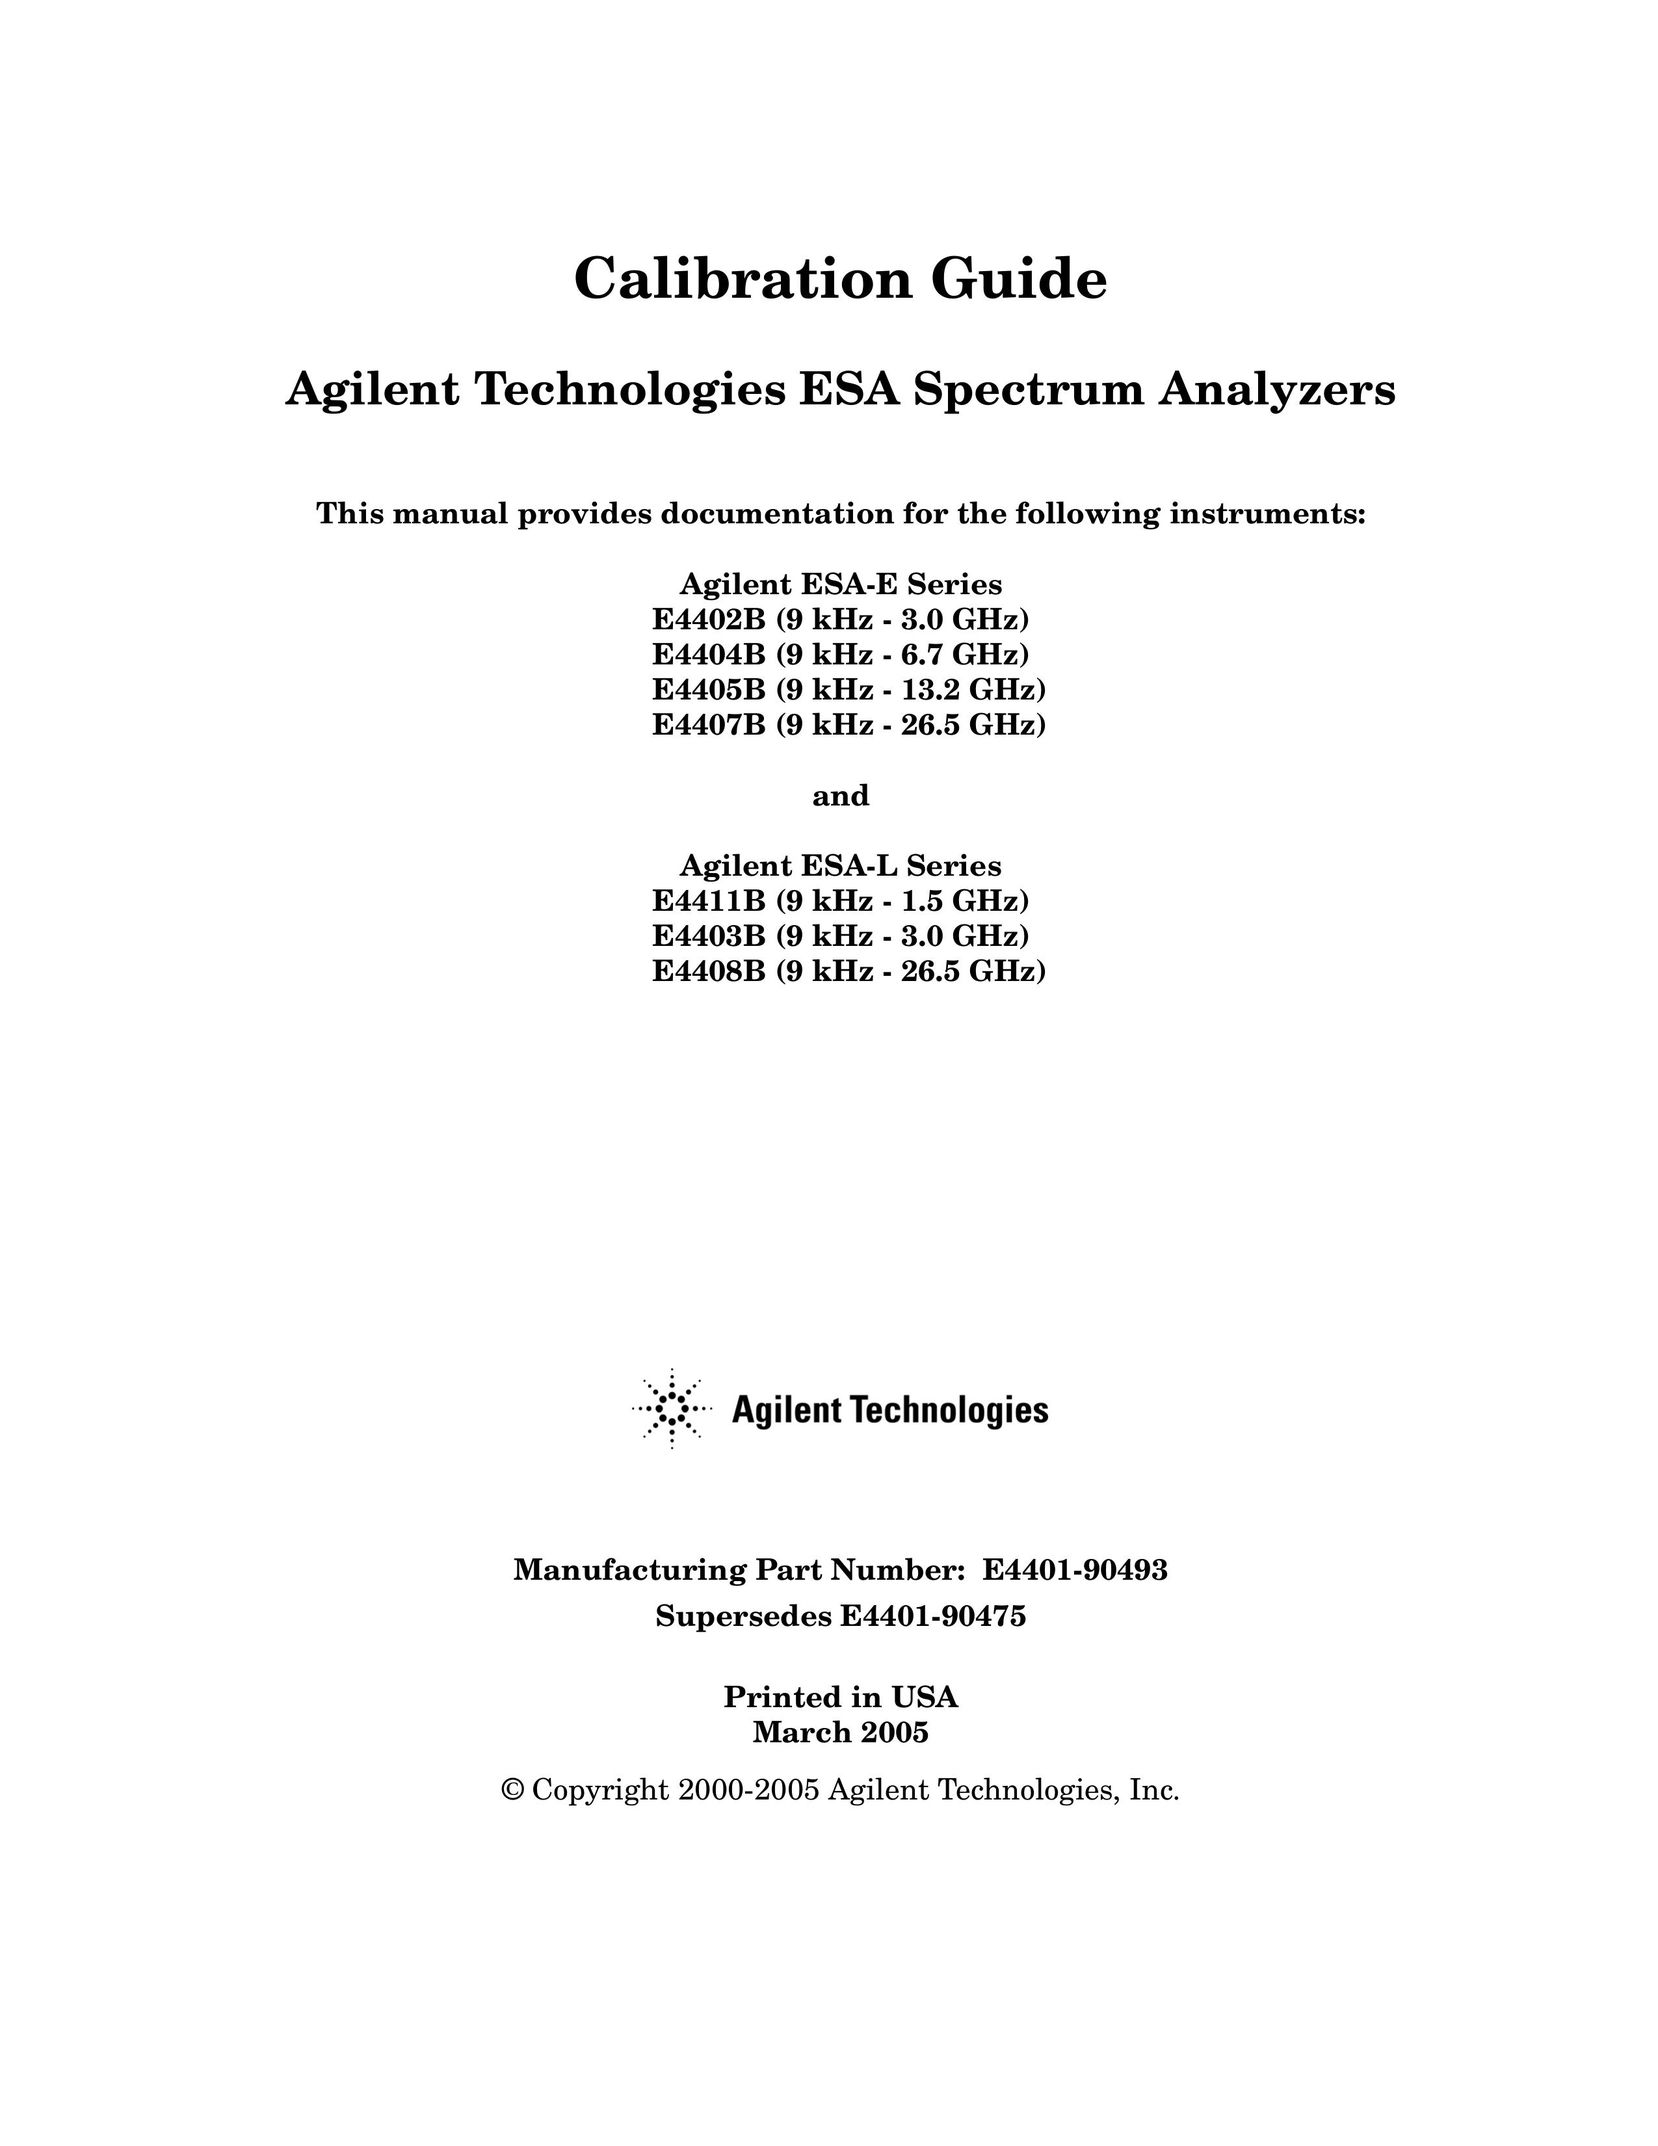 Agilent Technologies E1401-90493 Work Light User Manual